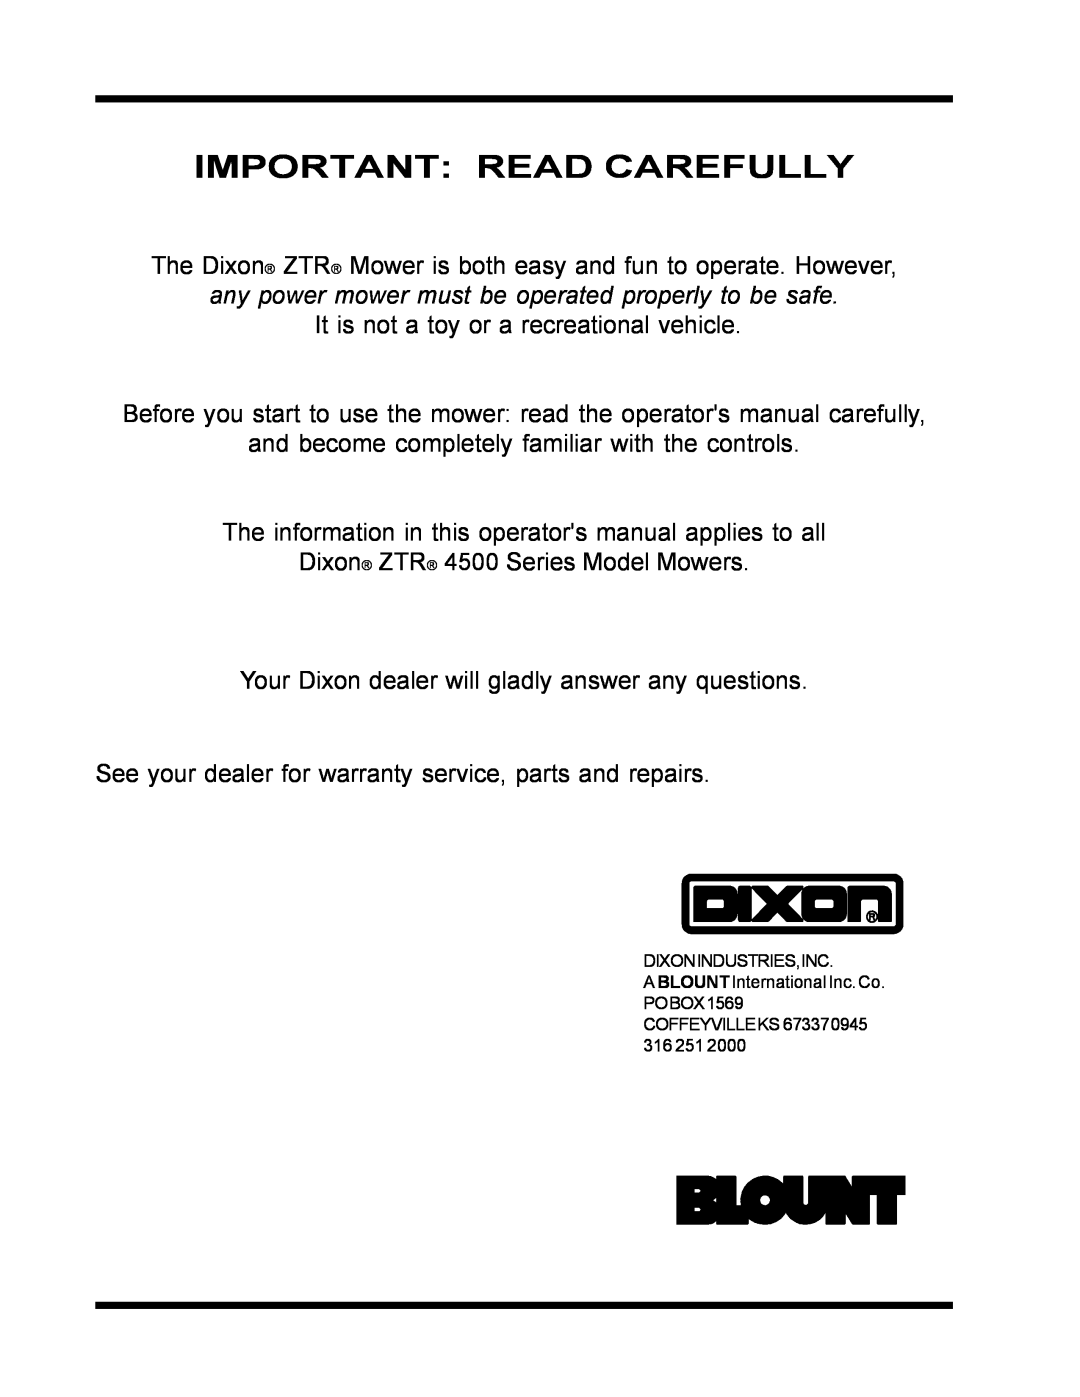 Dixon ZTR 4515B, ZTR 4516K manual Important Read Carefully 